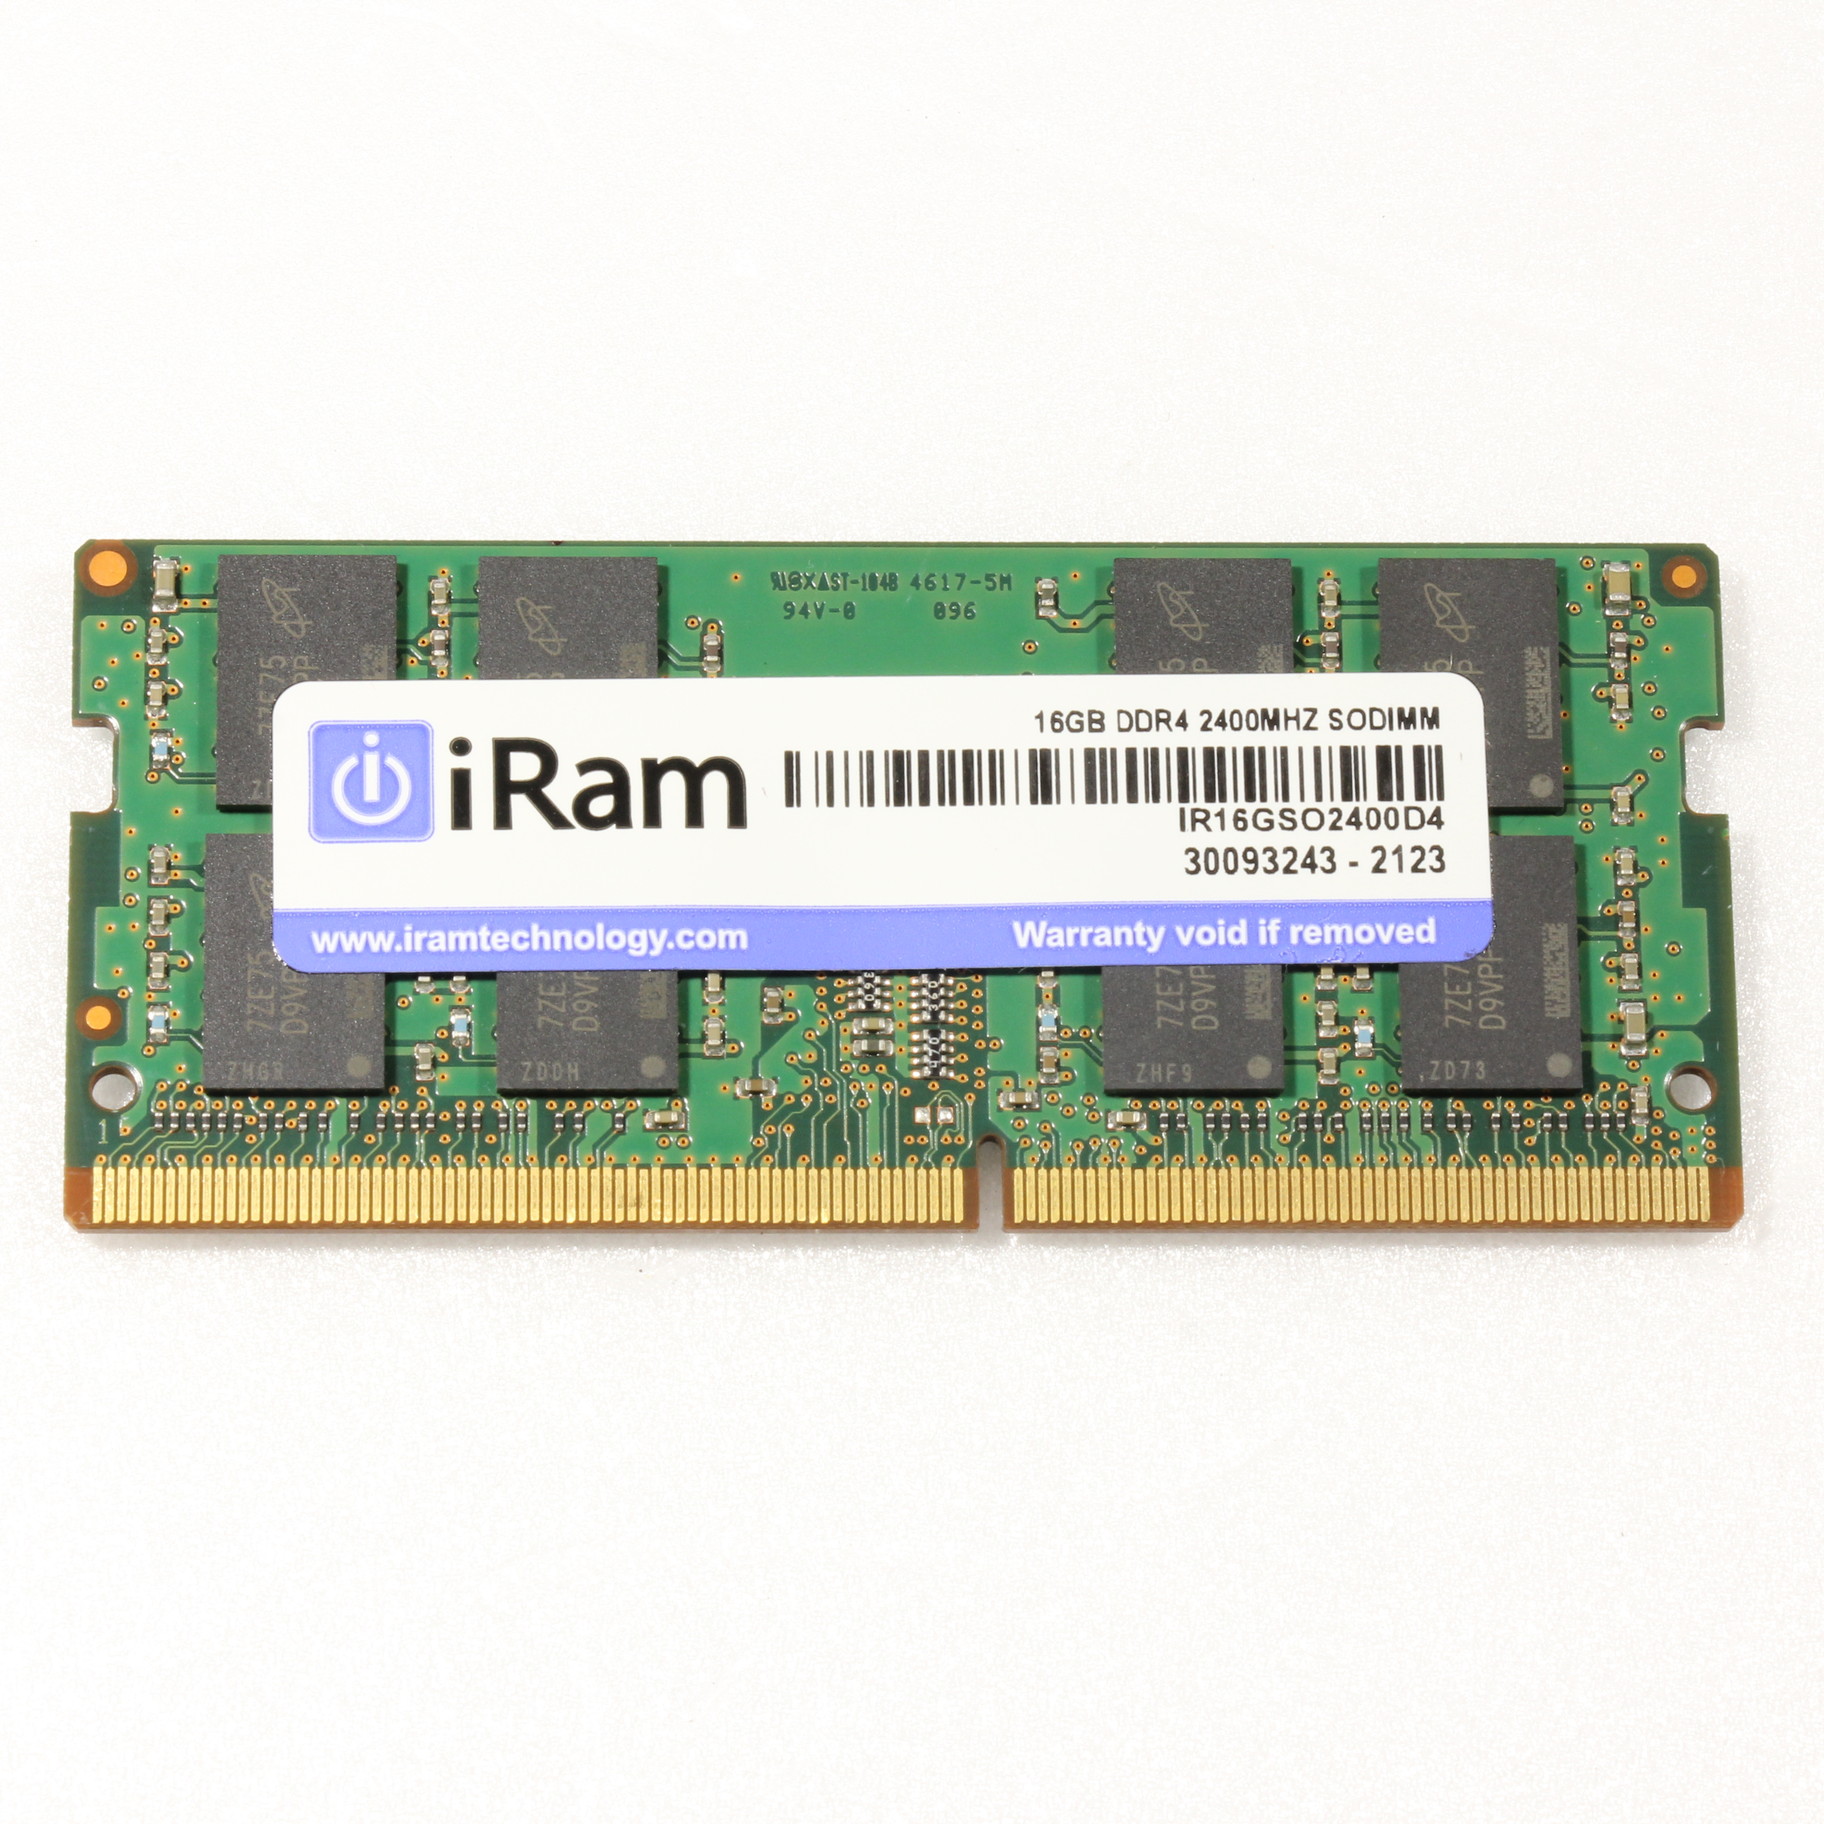 iMac用メモリ iRam アイラム 2400MHz DDR4 IR16GSO2400D4 ネコポス不可